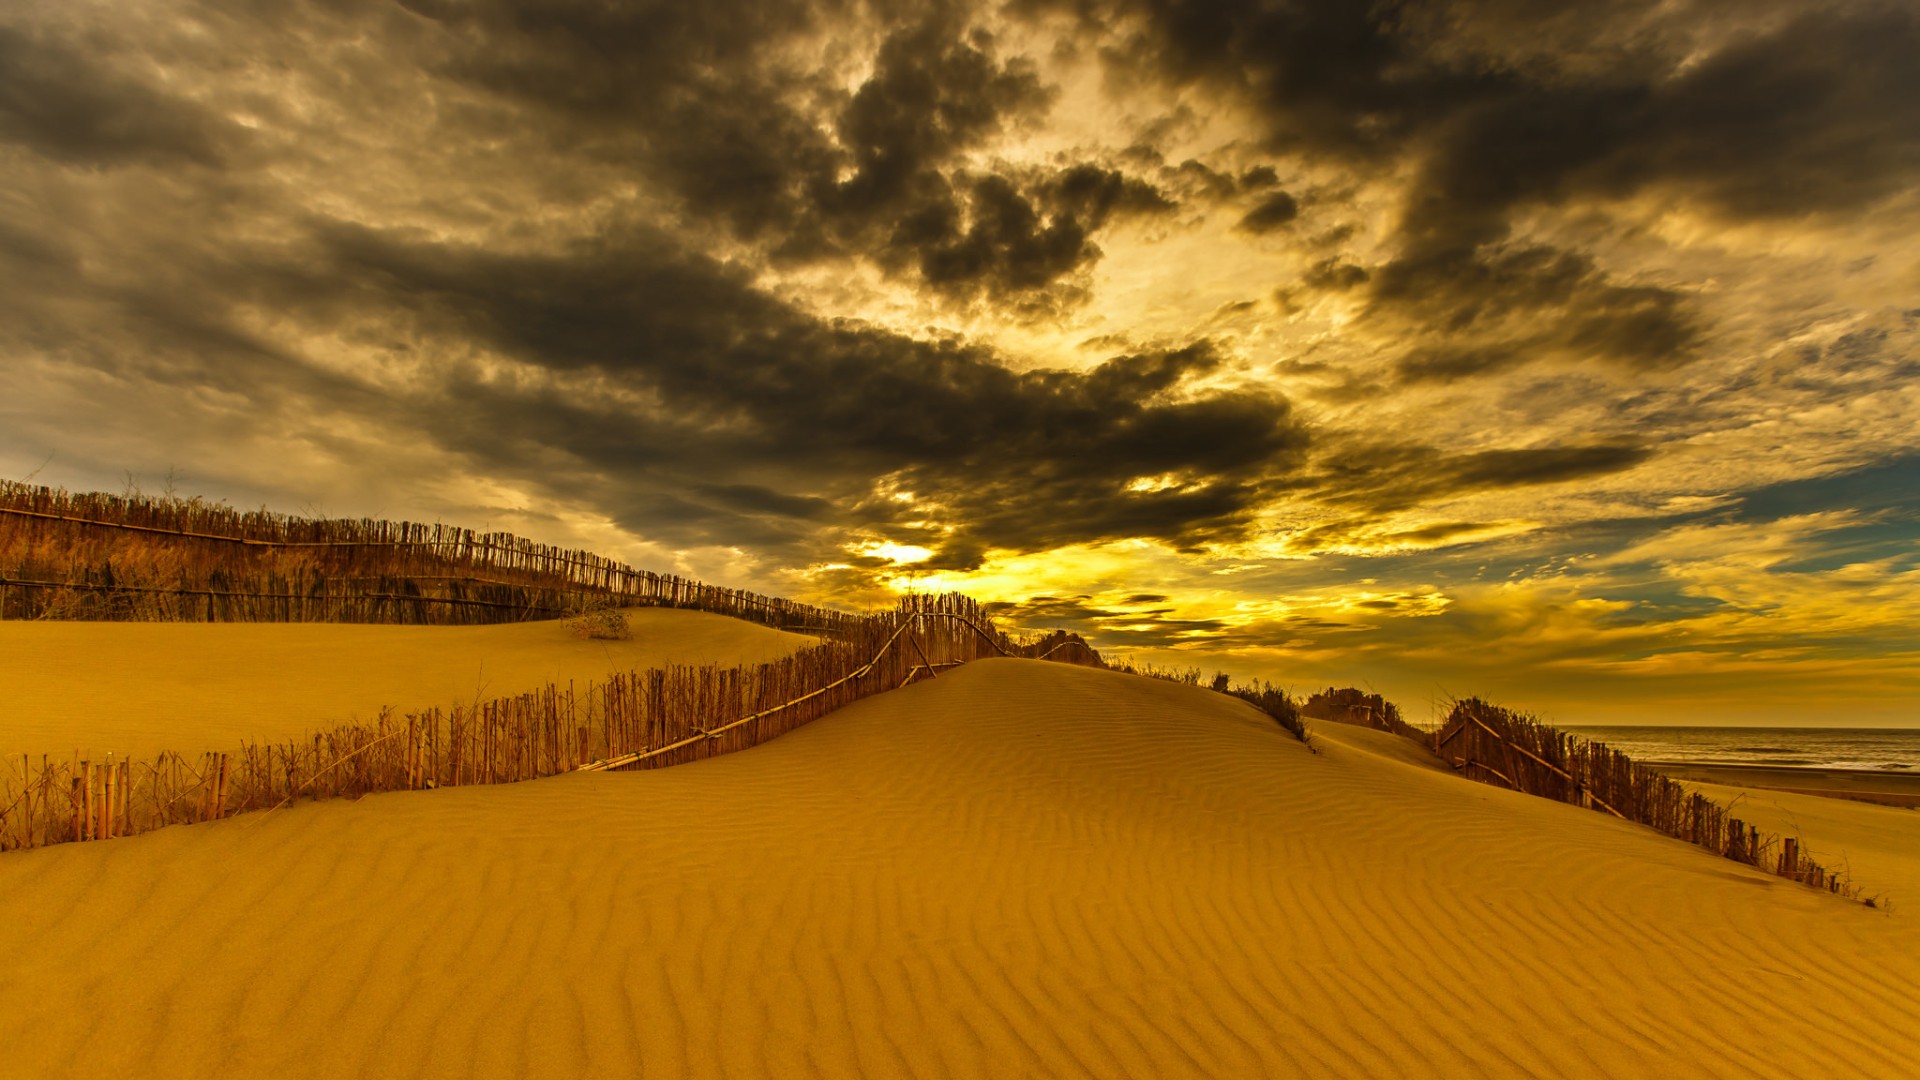 General 1920x1080 clouds desert dunes sand Sun plants Taiwan HDR outdoors Asia sunlight